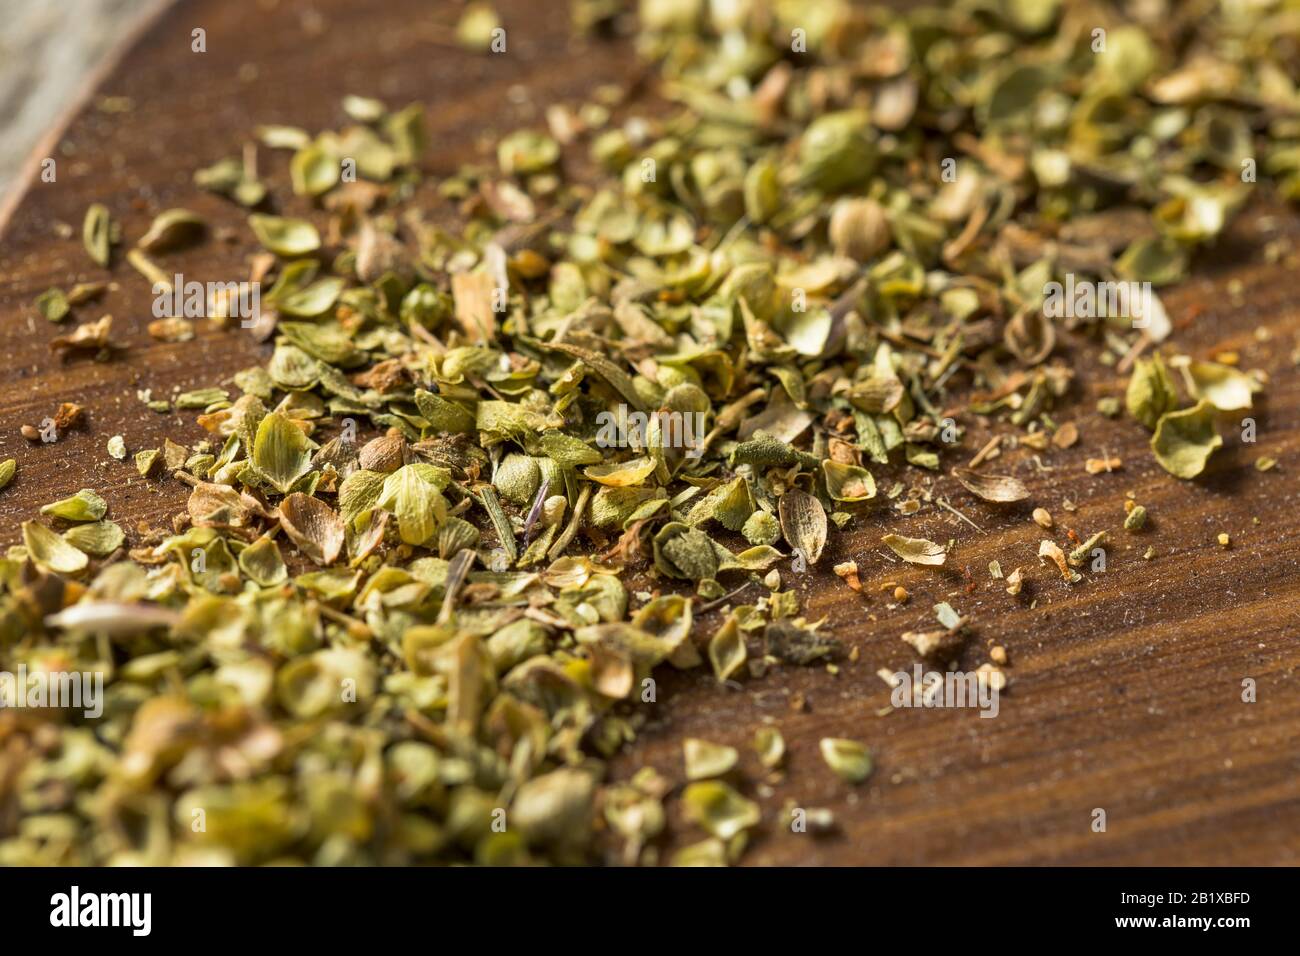 Raw Dried Green Greek Oregano Spice in a Bowl Stock Photo